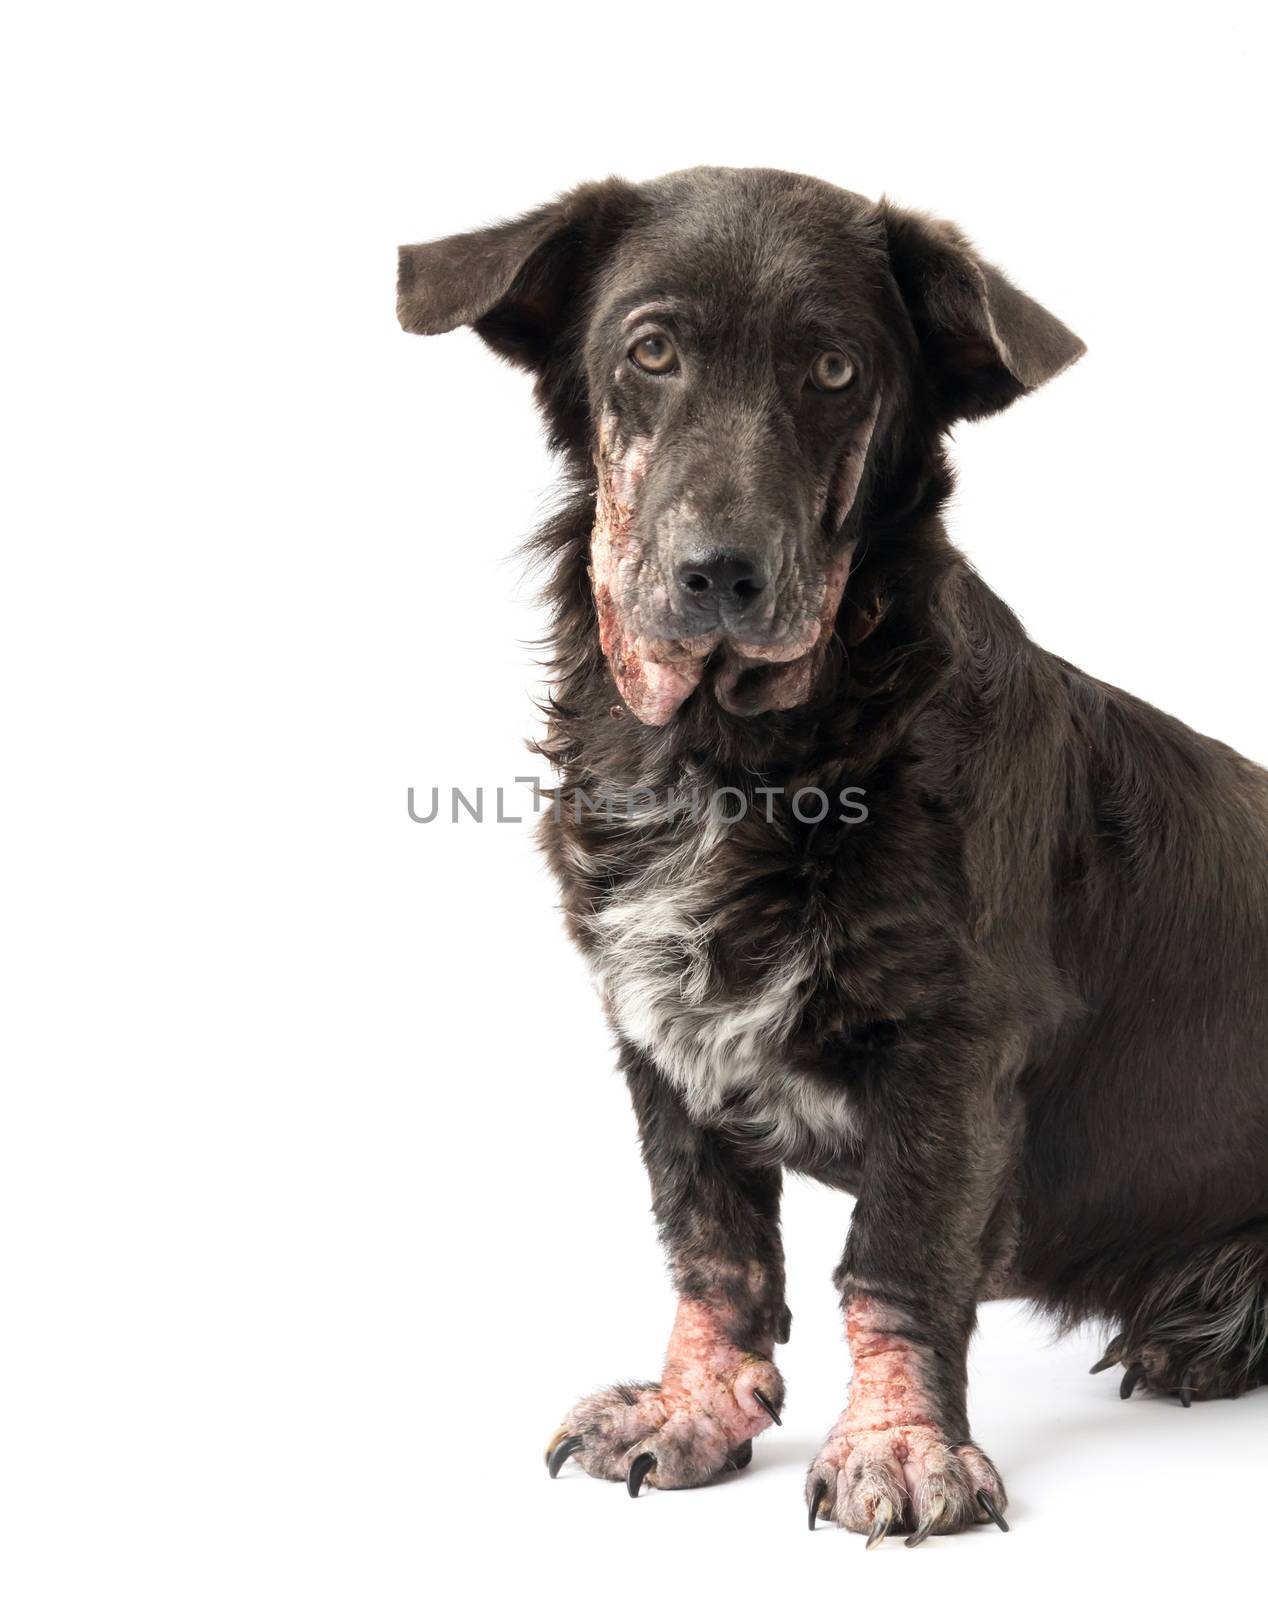 Dog sick leprosy skin problem with white background